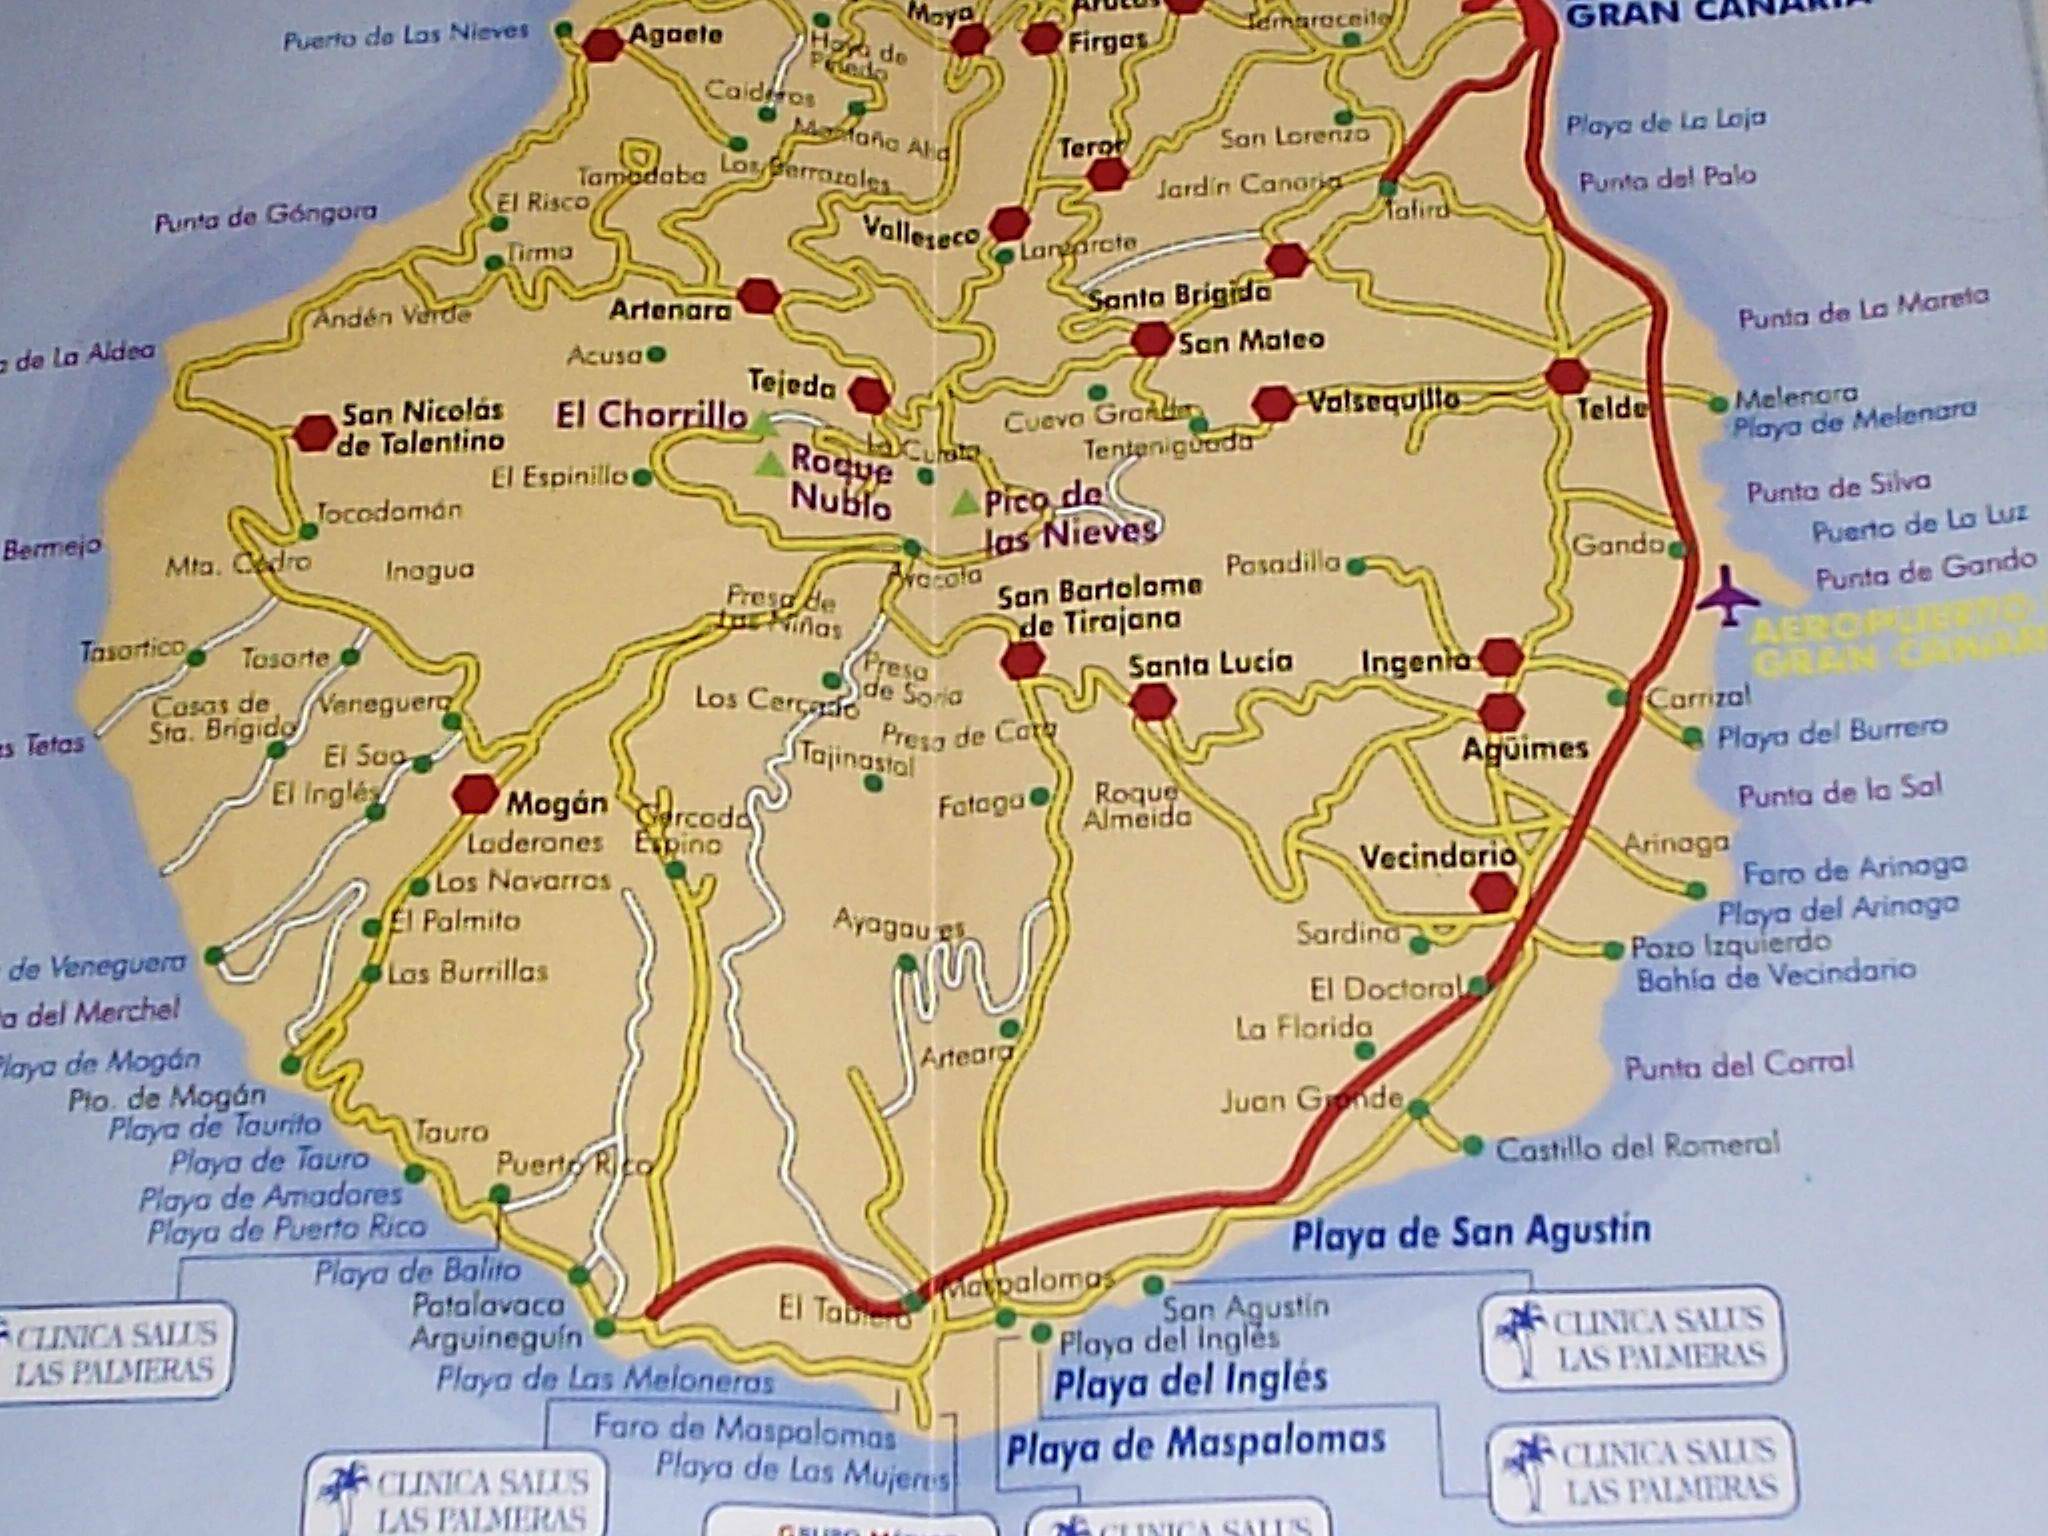 las palmas gran canaria tourist map pdf